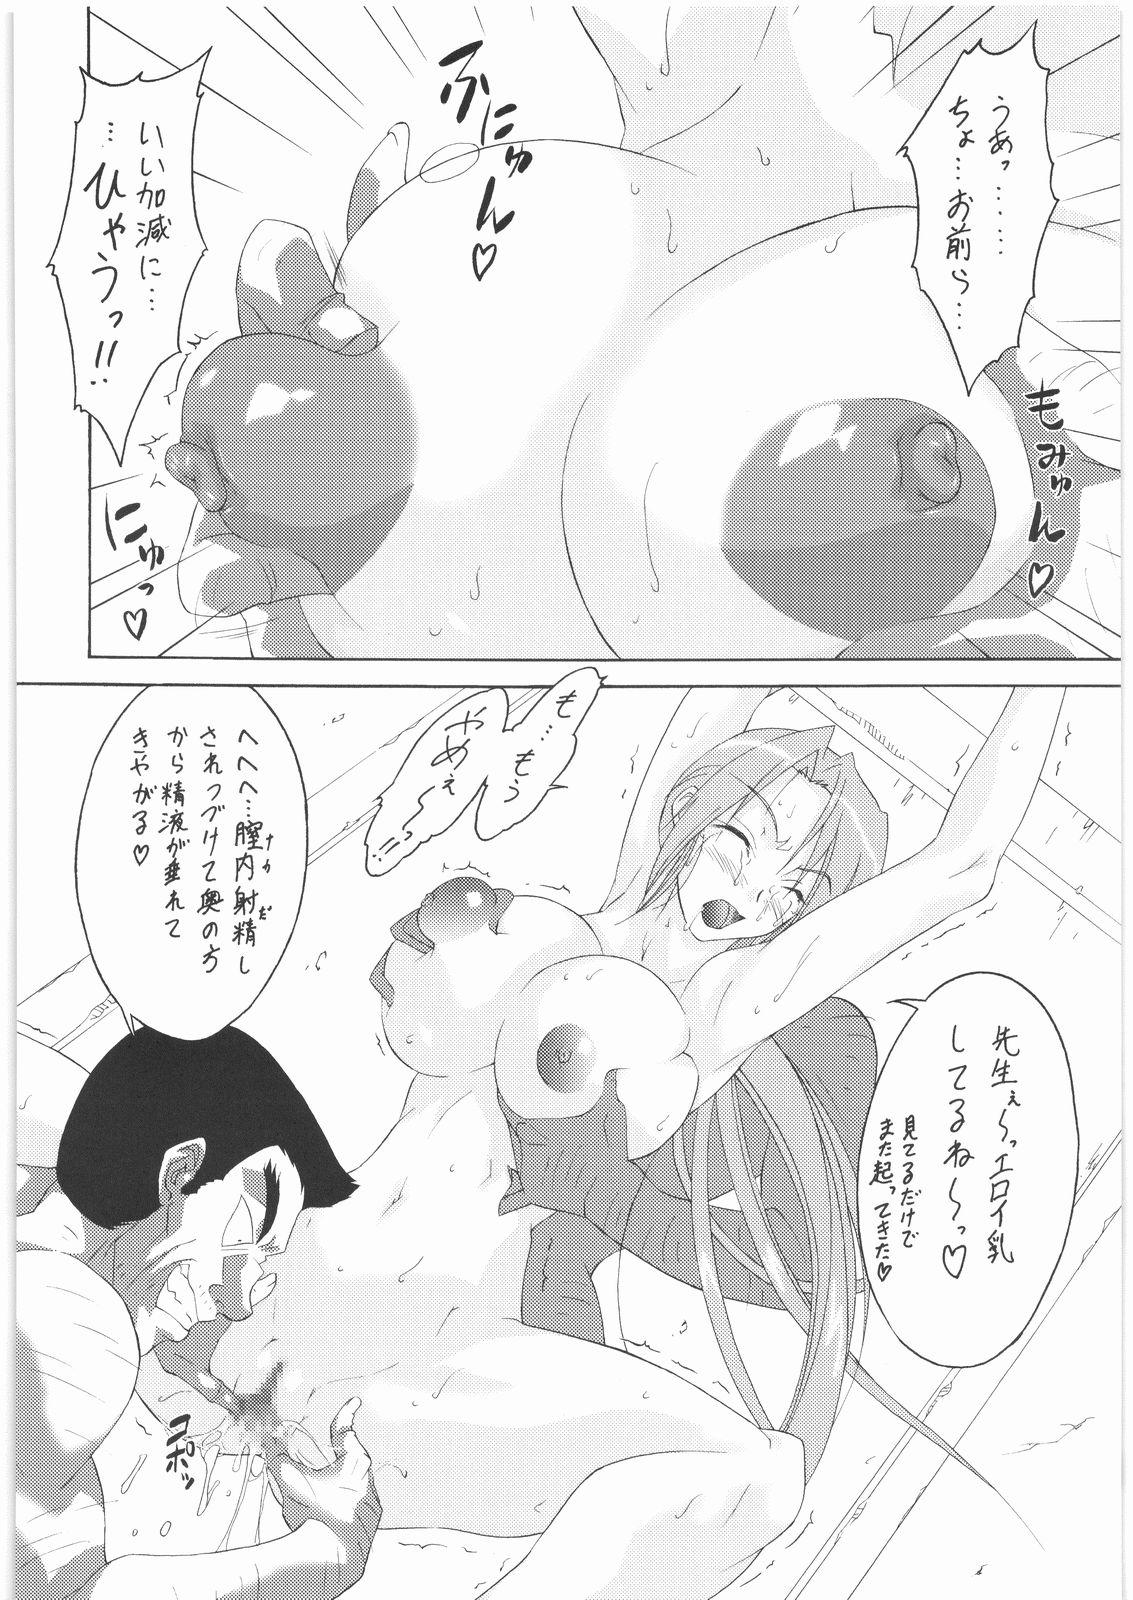 Lez Konata no Maruhi Baito - Lucky star Monstercock - Page 5